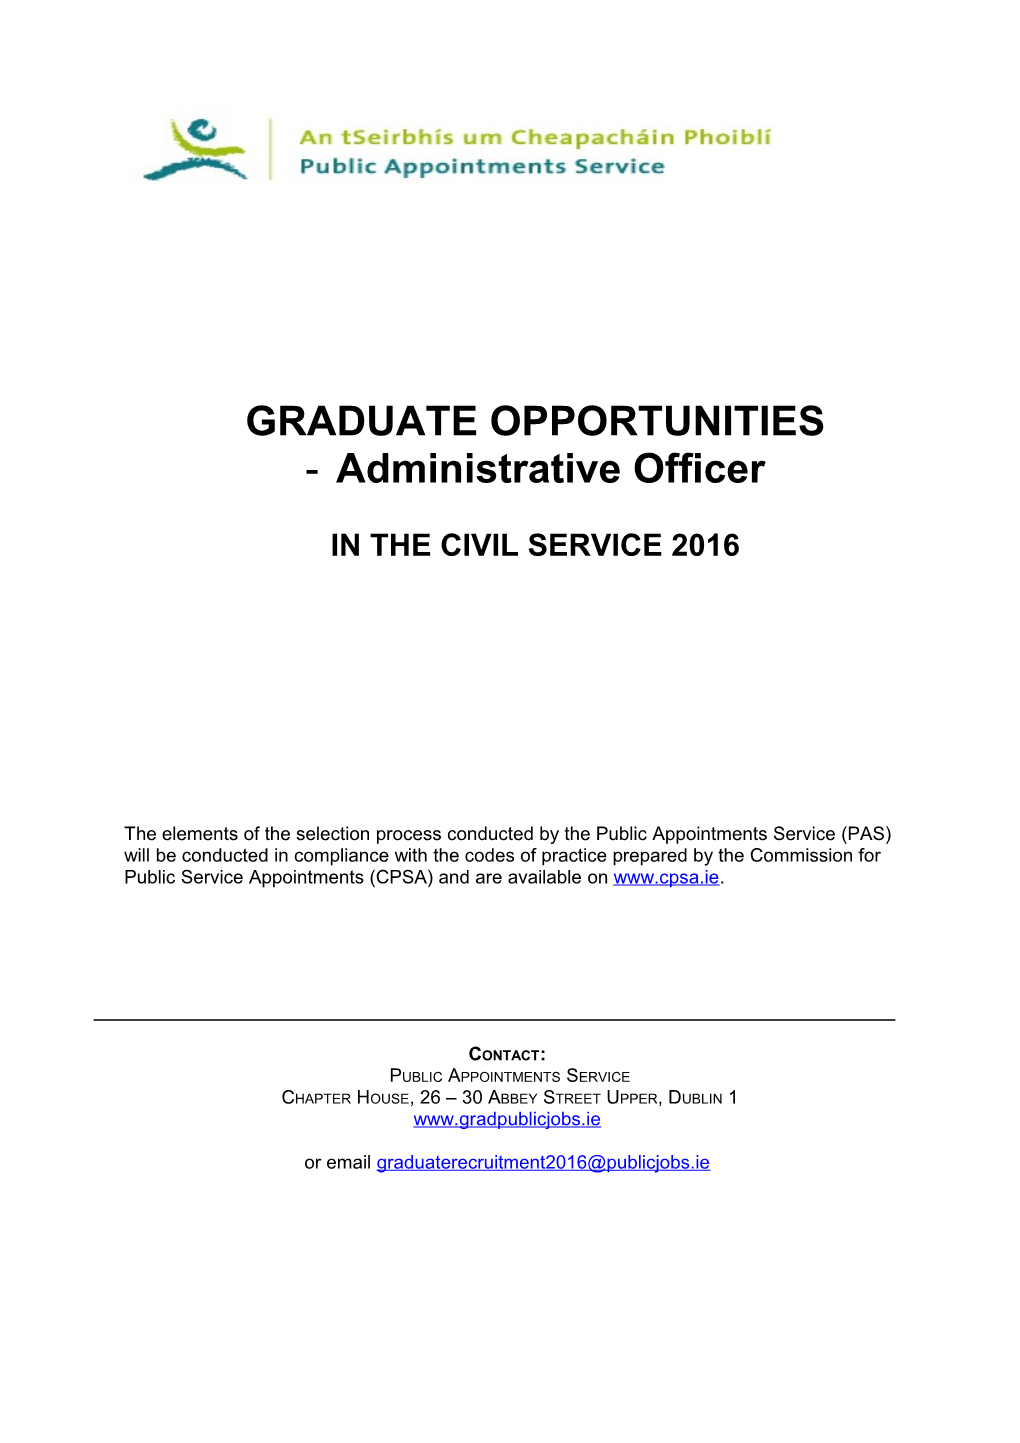 Graduate Opportunities